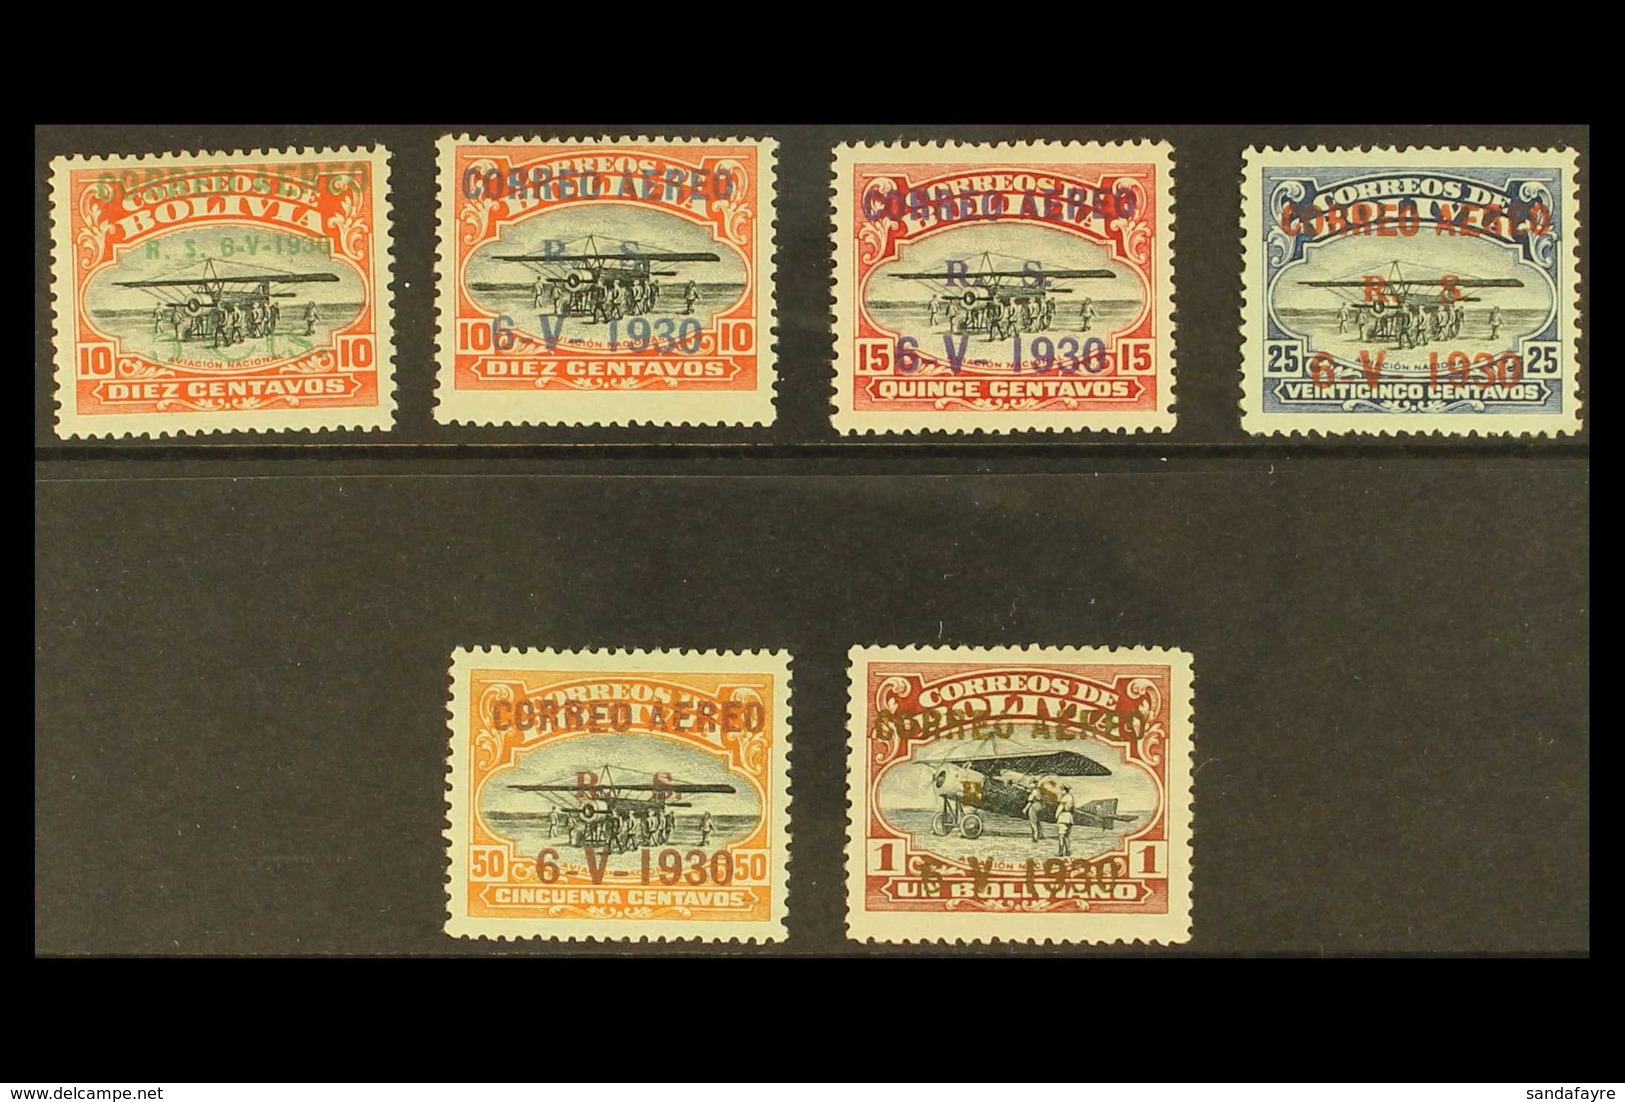 1930 Air "CORREO AEREO" Overprints Complete Basic Set (SG 228/35, Scott C11/12, C14/16 & C18), Very Fine Mint, Very Fres - Bolivia